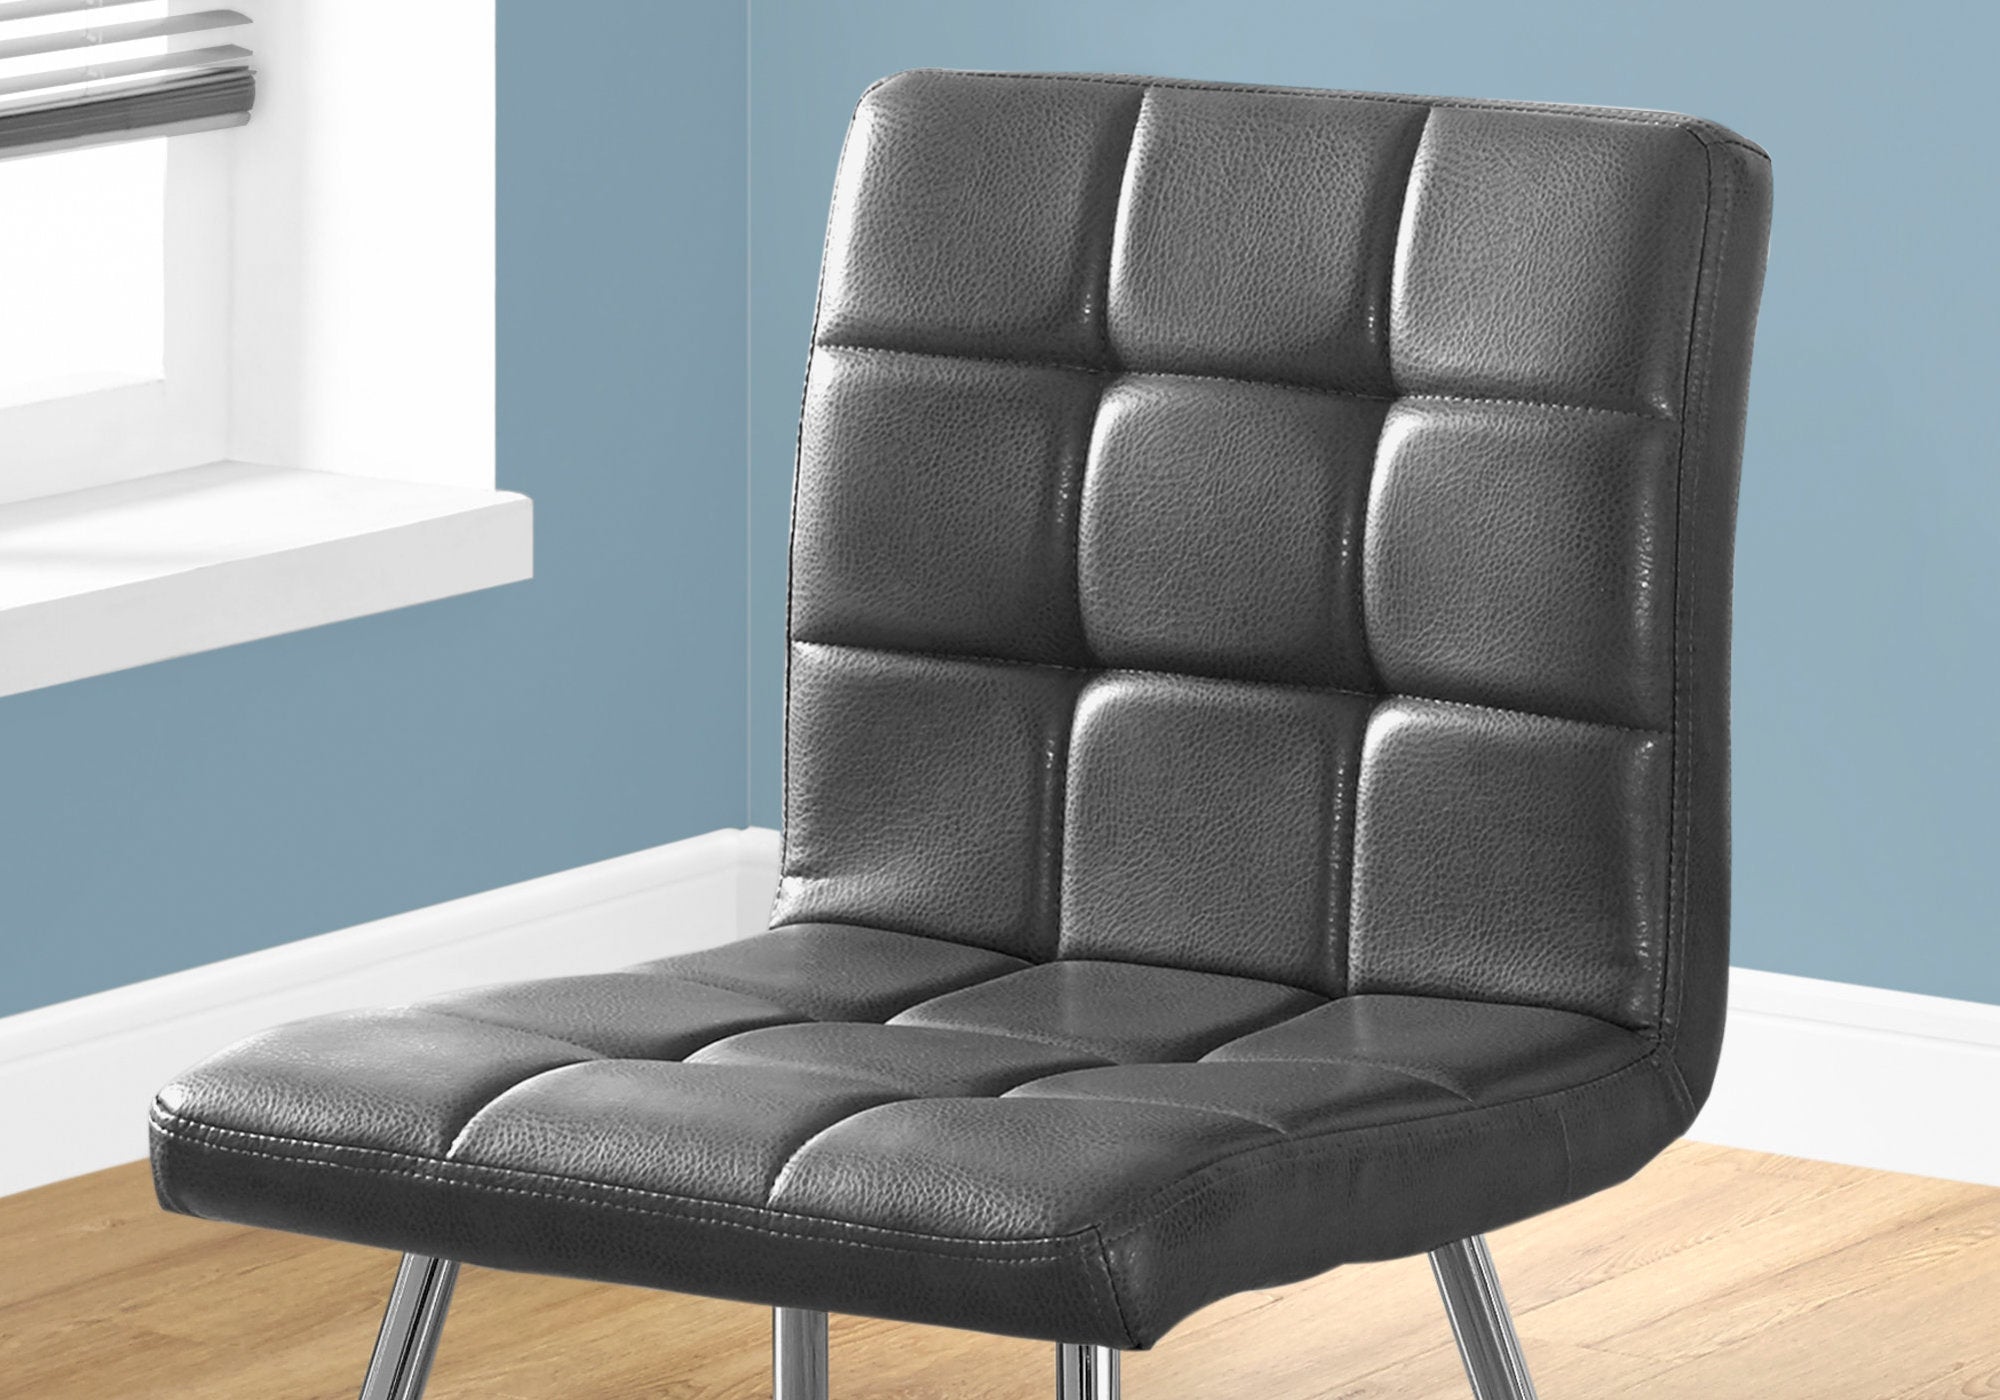 47" x 37" x 63" Black Foam Metal Polyurethane Leather Look Dining Chairs 2pcs